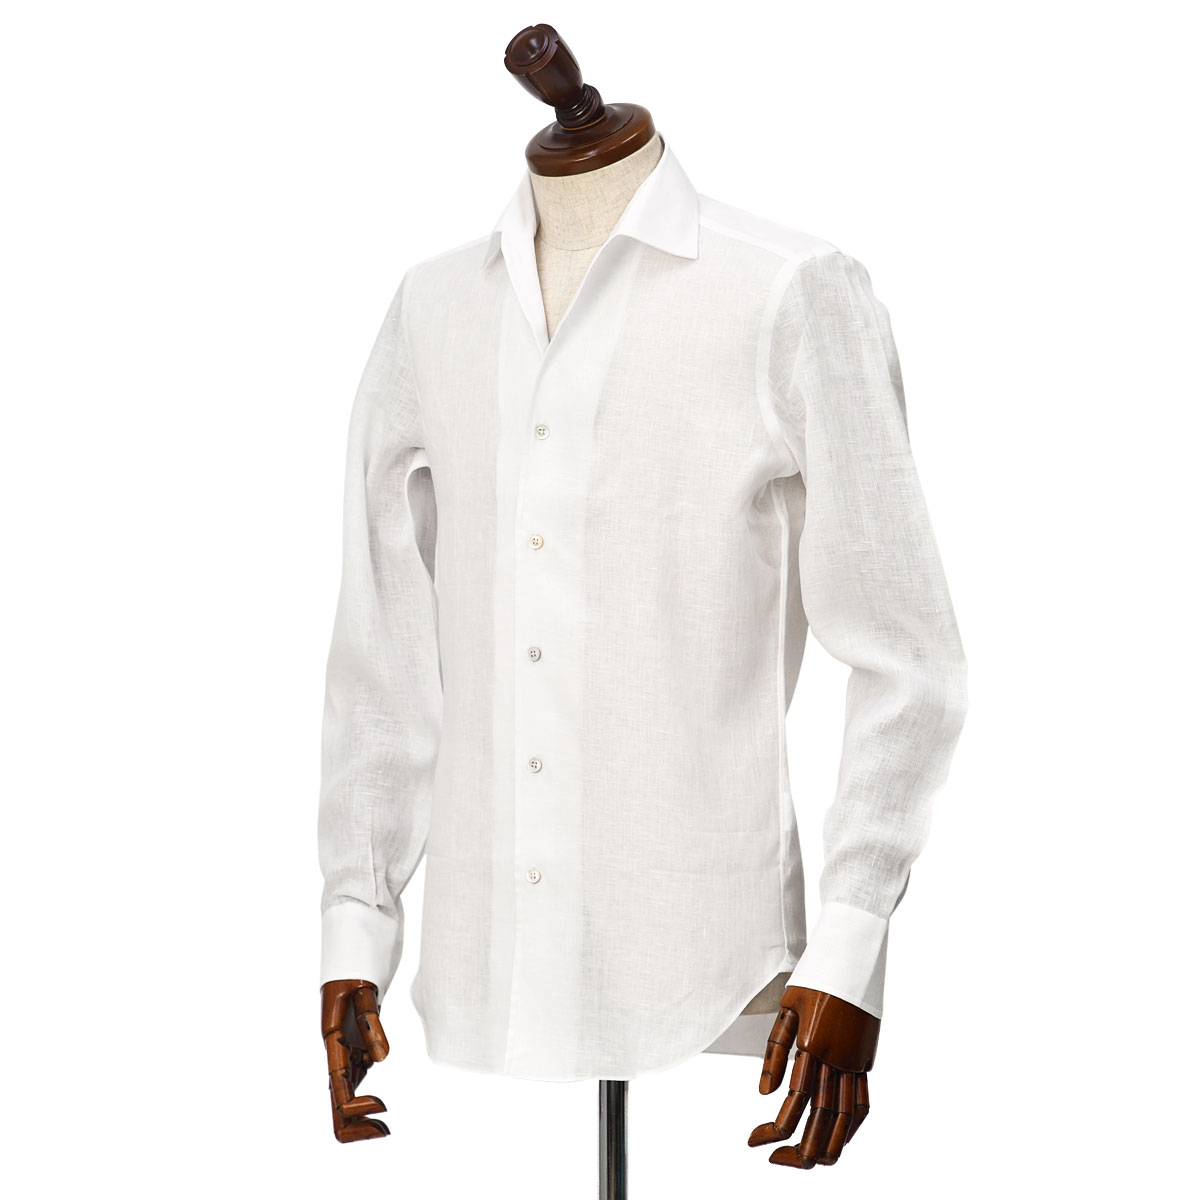 Maria Santangeloワンピースカラーシャツ Sahara2 F338562 1 リネン ホワイト